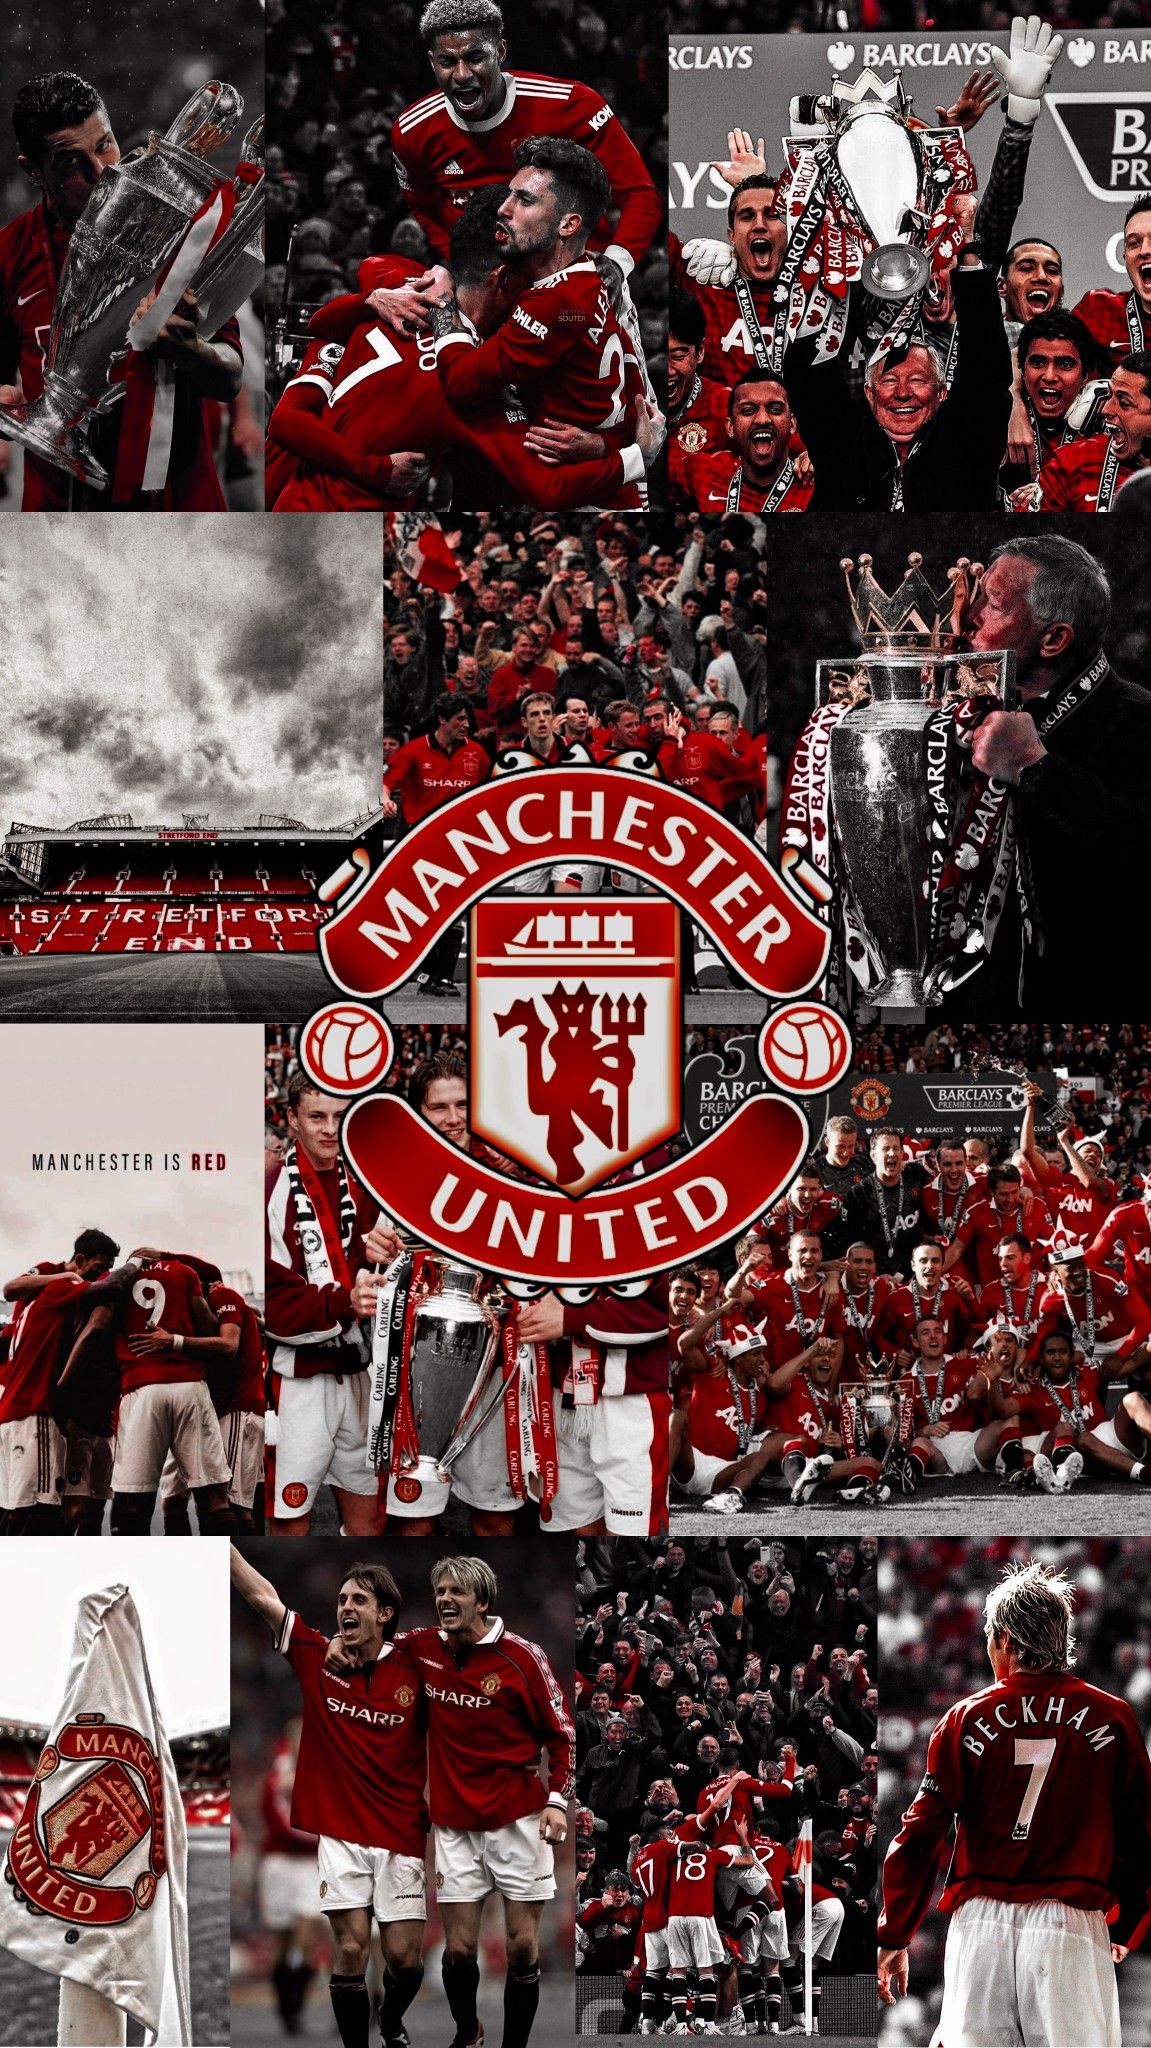 Manchester United Wallpaper. Manchester united wallpaper, Manchester united wallpaper iphone, Manchester united logo